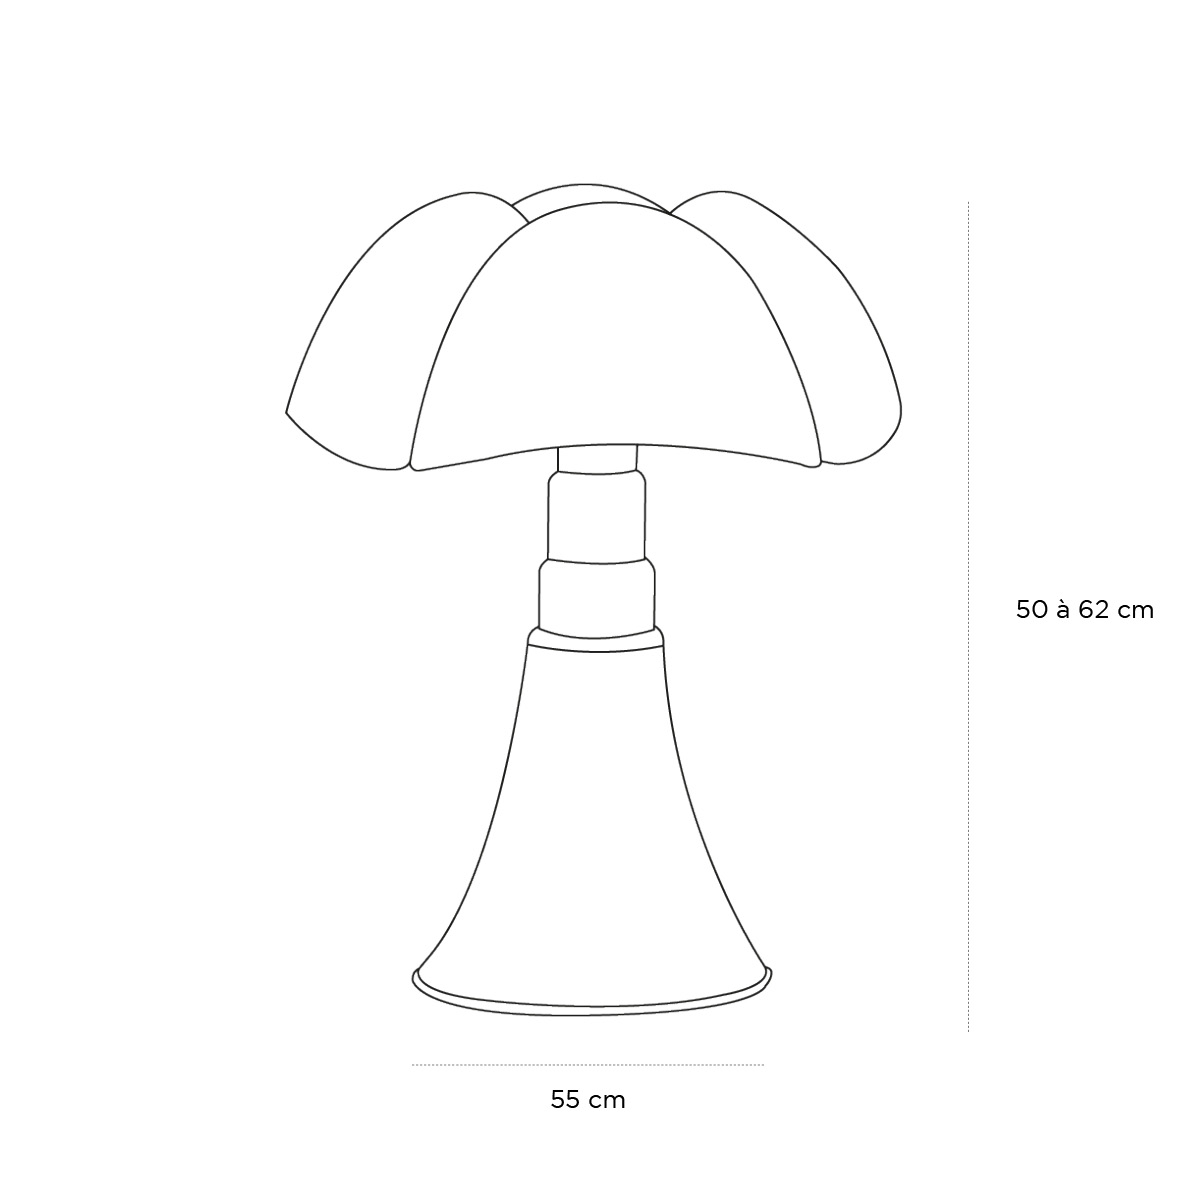 Schéma du produit Lampe Pipistrello Vert agave